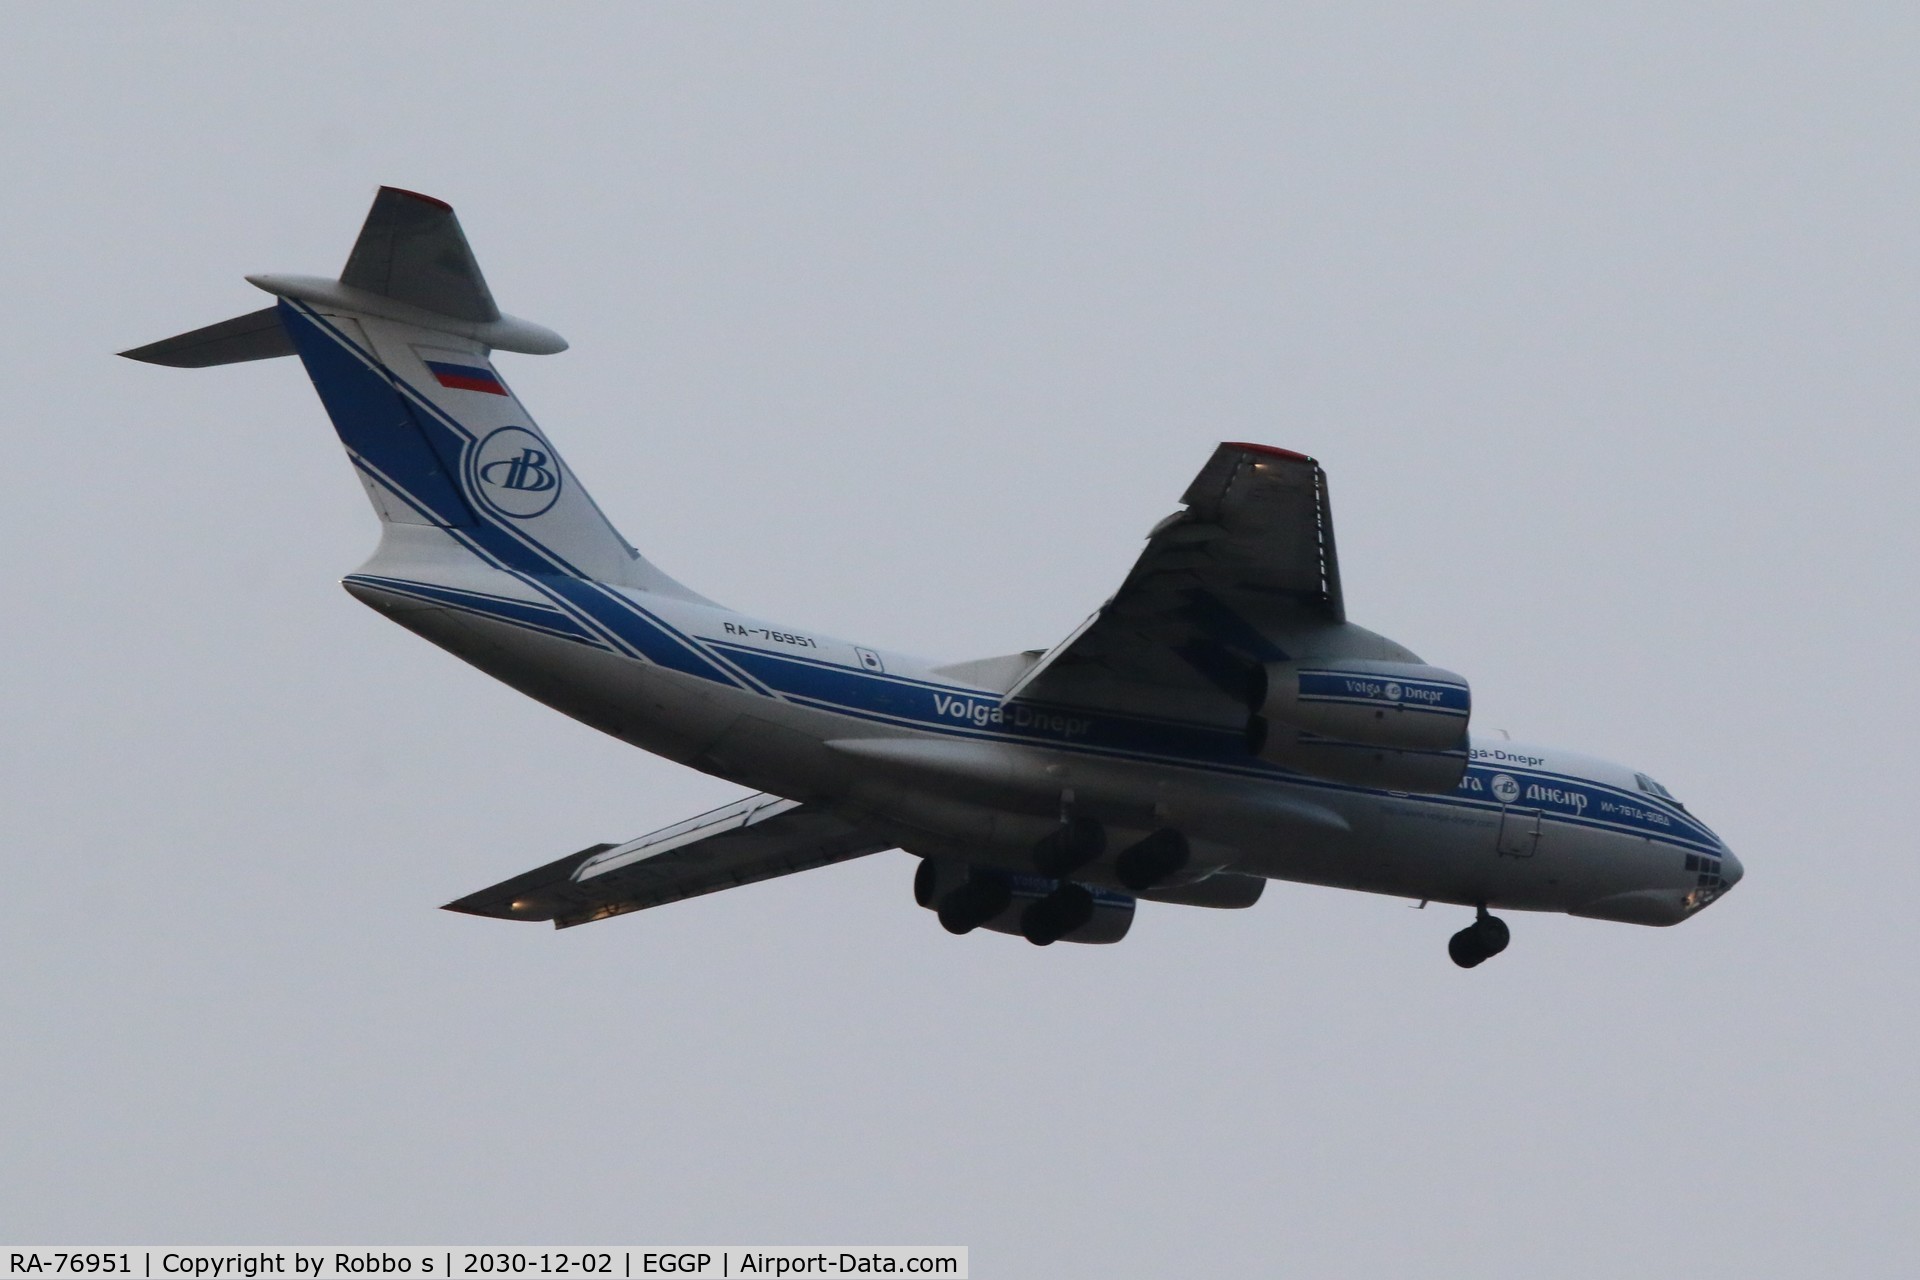 RA-76951, 2007 Ilyushin Il-76TD-90VD C/N 2073421704, RA-76951 IL 76 arriving at Liverpool Airport on a cargo flight.